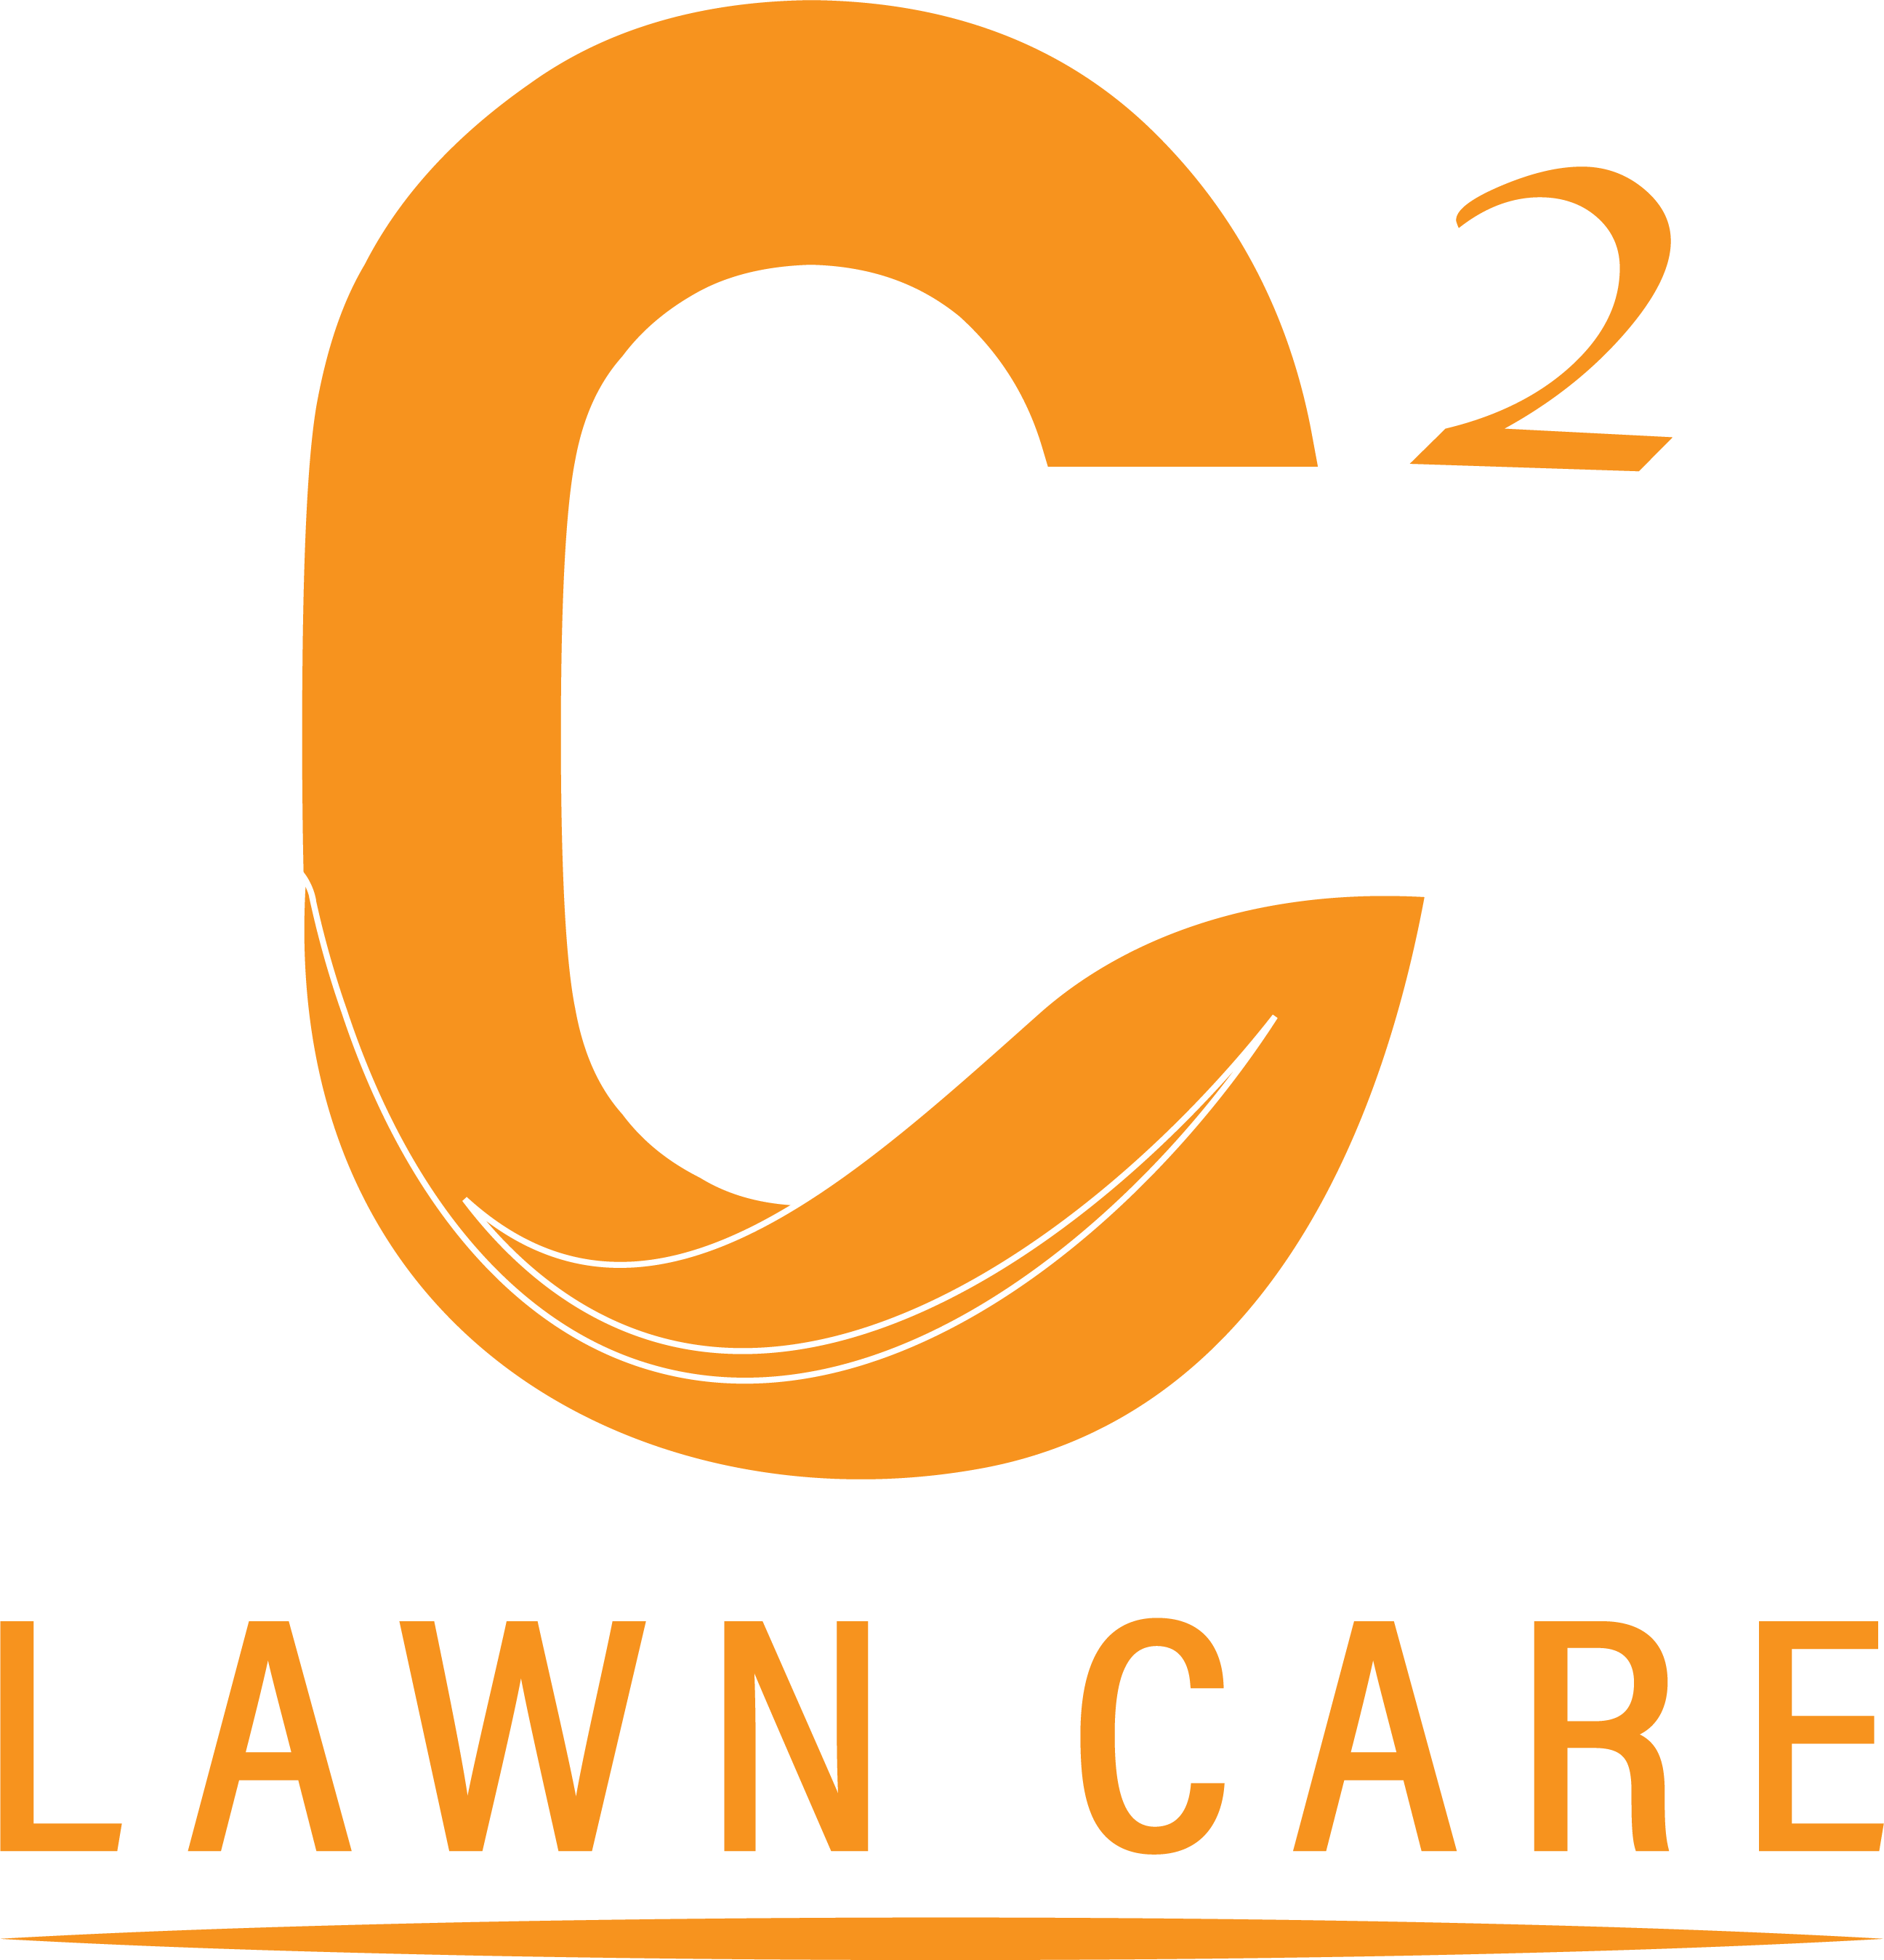 C2 Lawn Care Logo